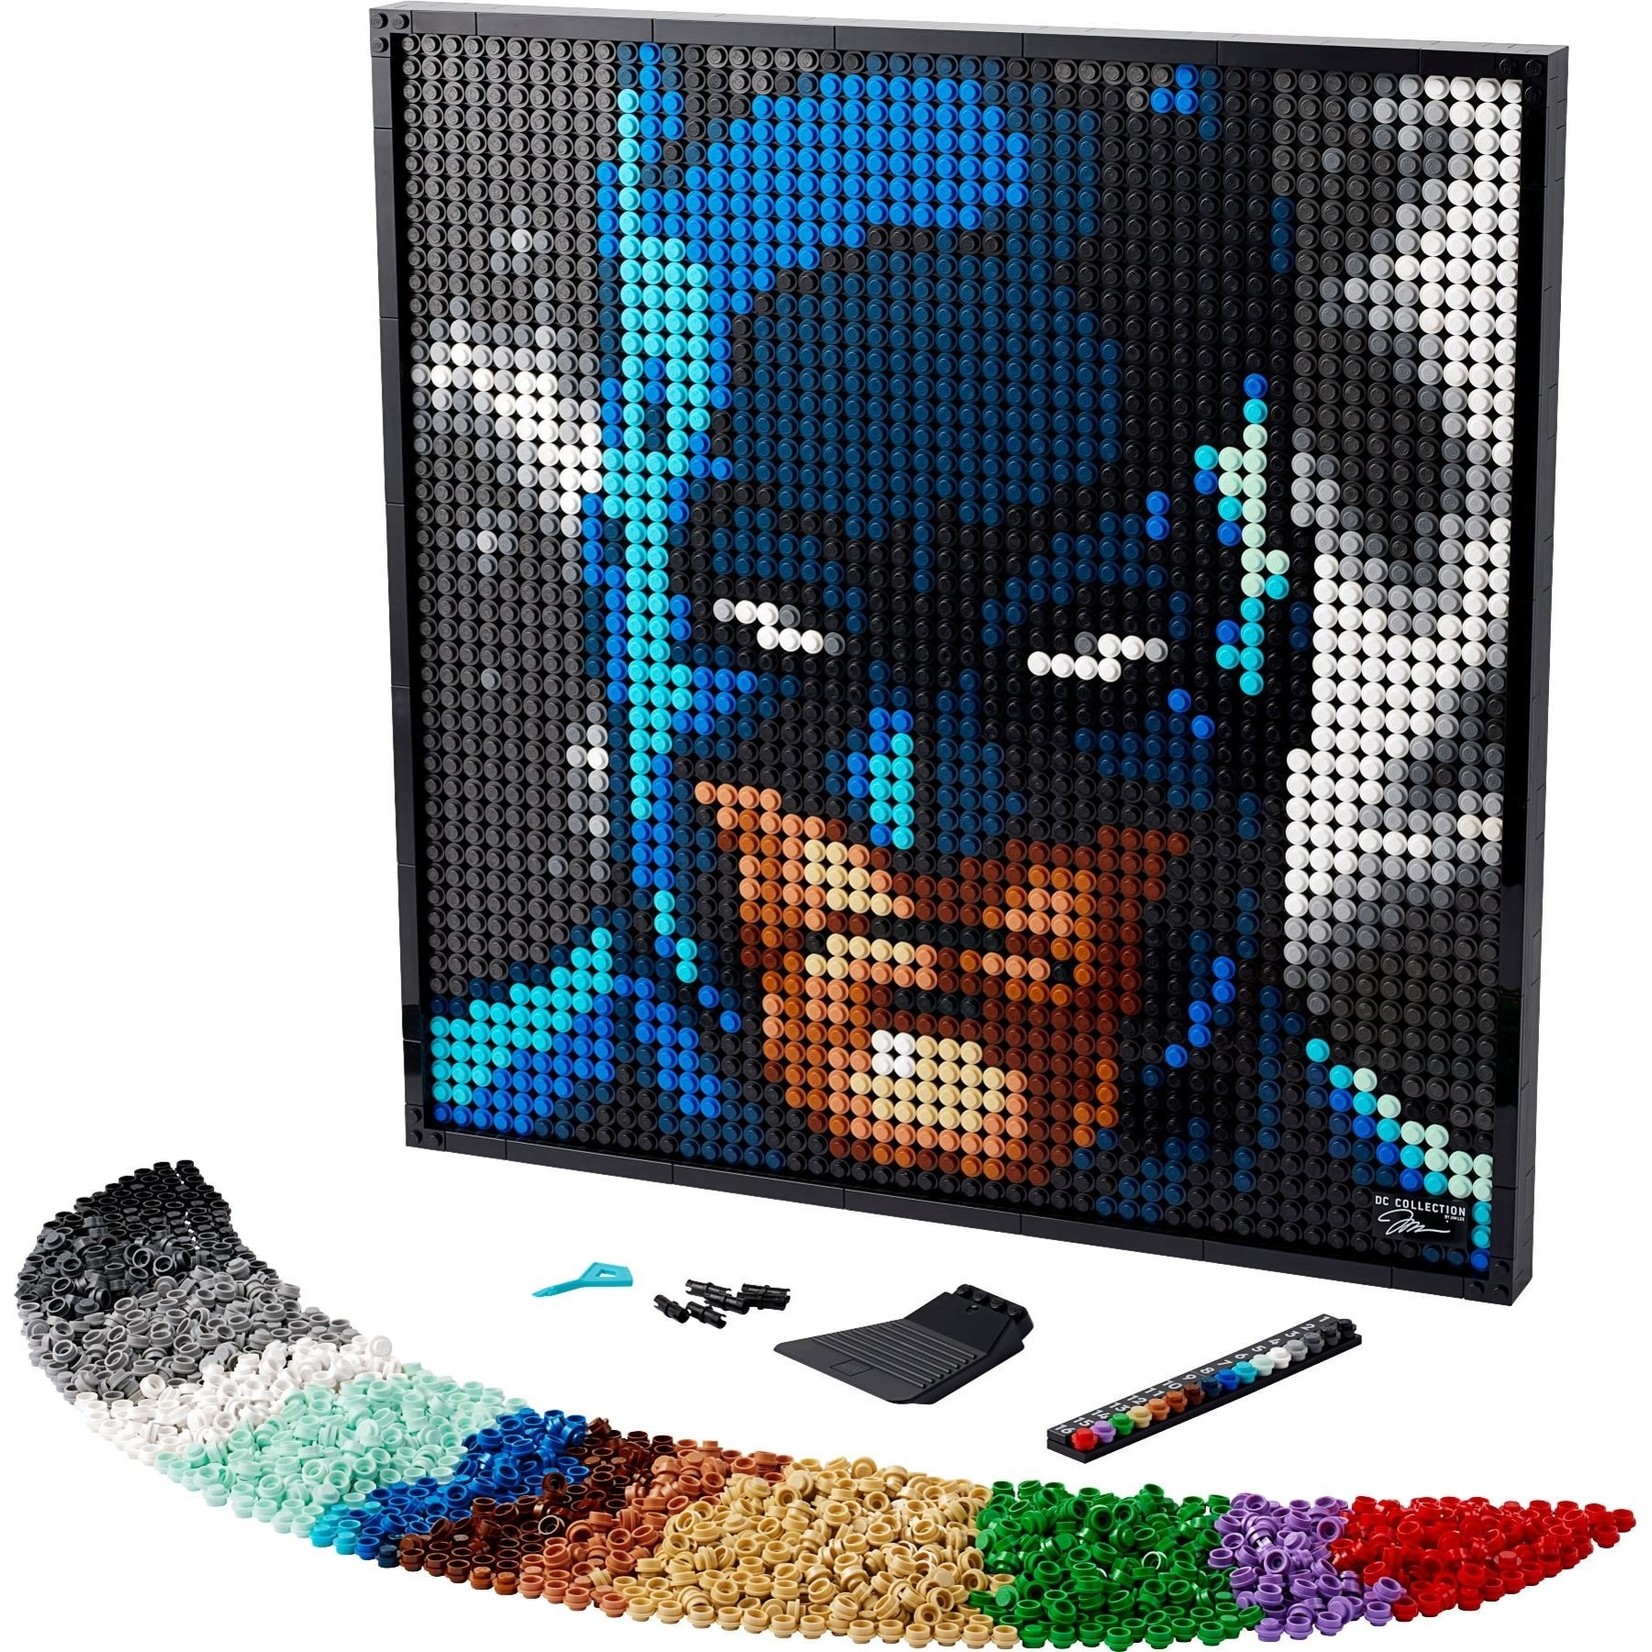 LEGO Jim Lee Batman - 31205